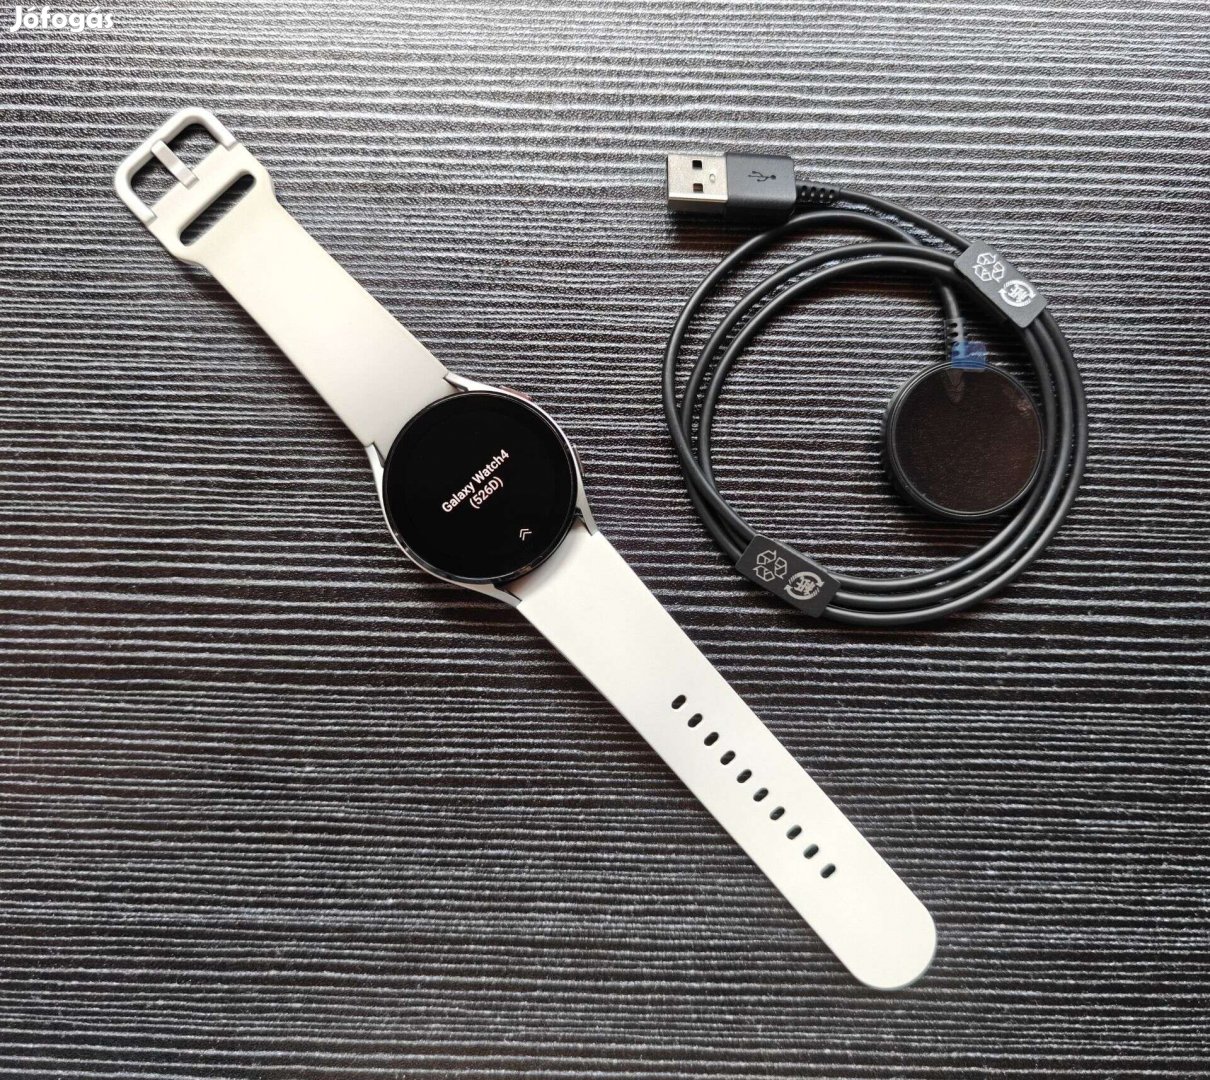 Samsung Galaxy Watch 4 (40 mm)